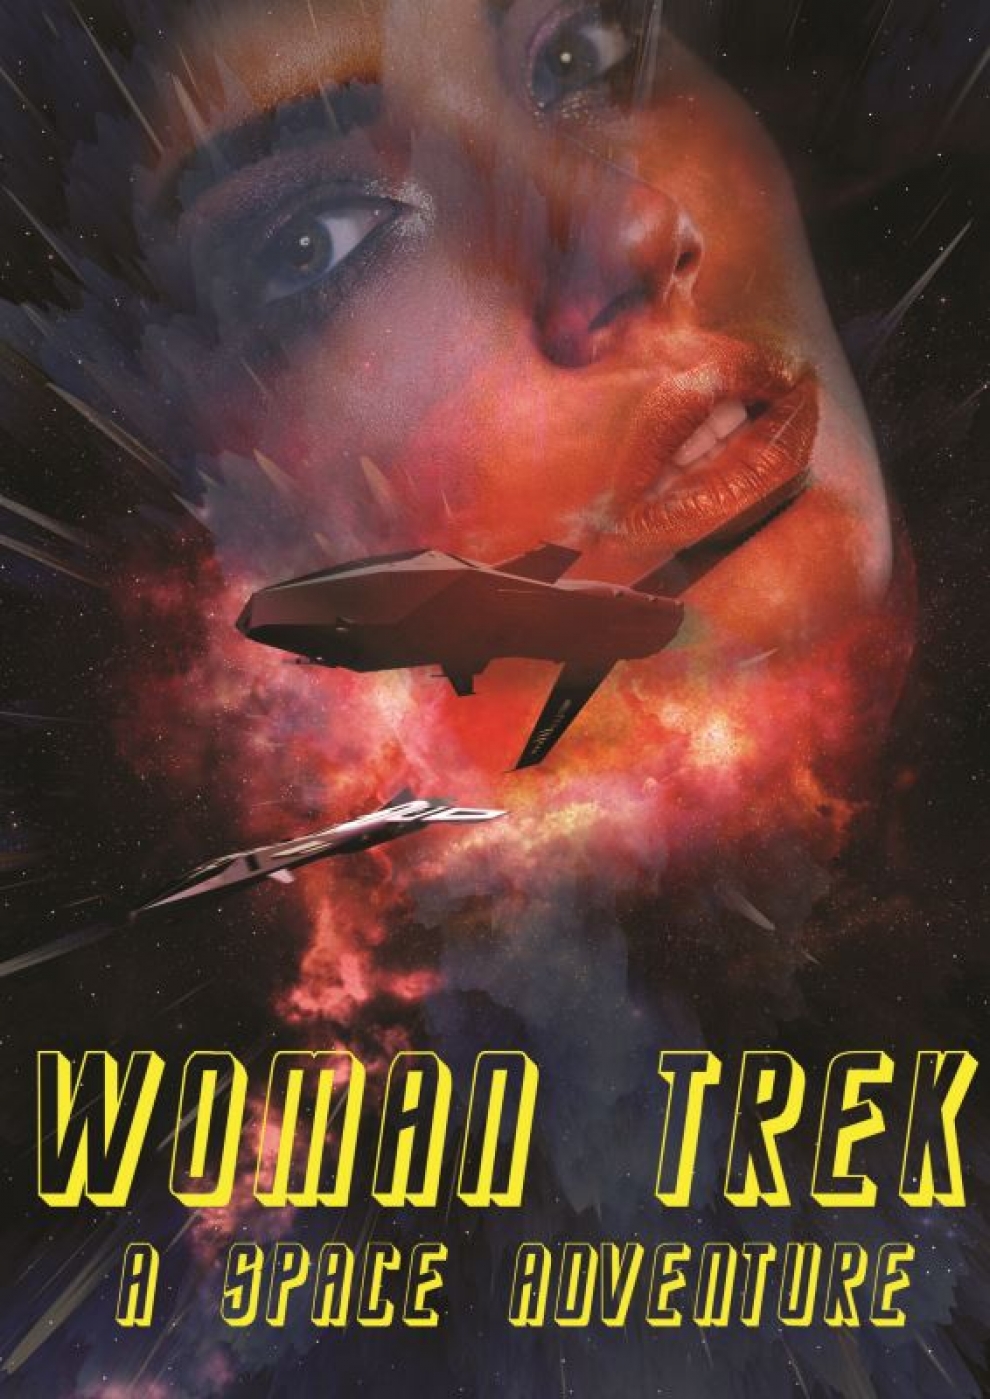 Woman Trek, a space adventure